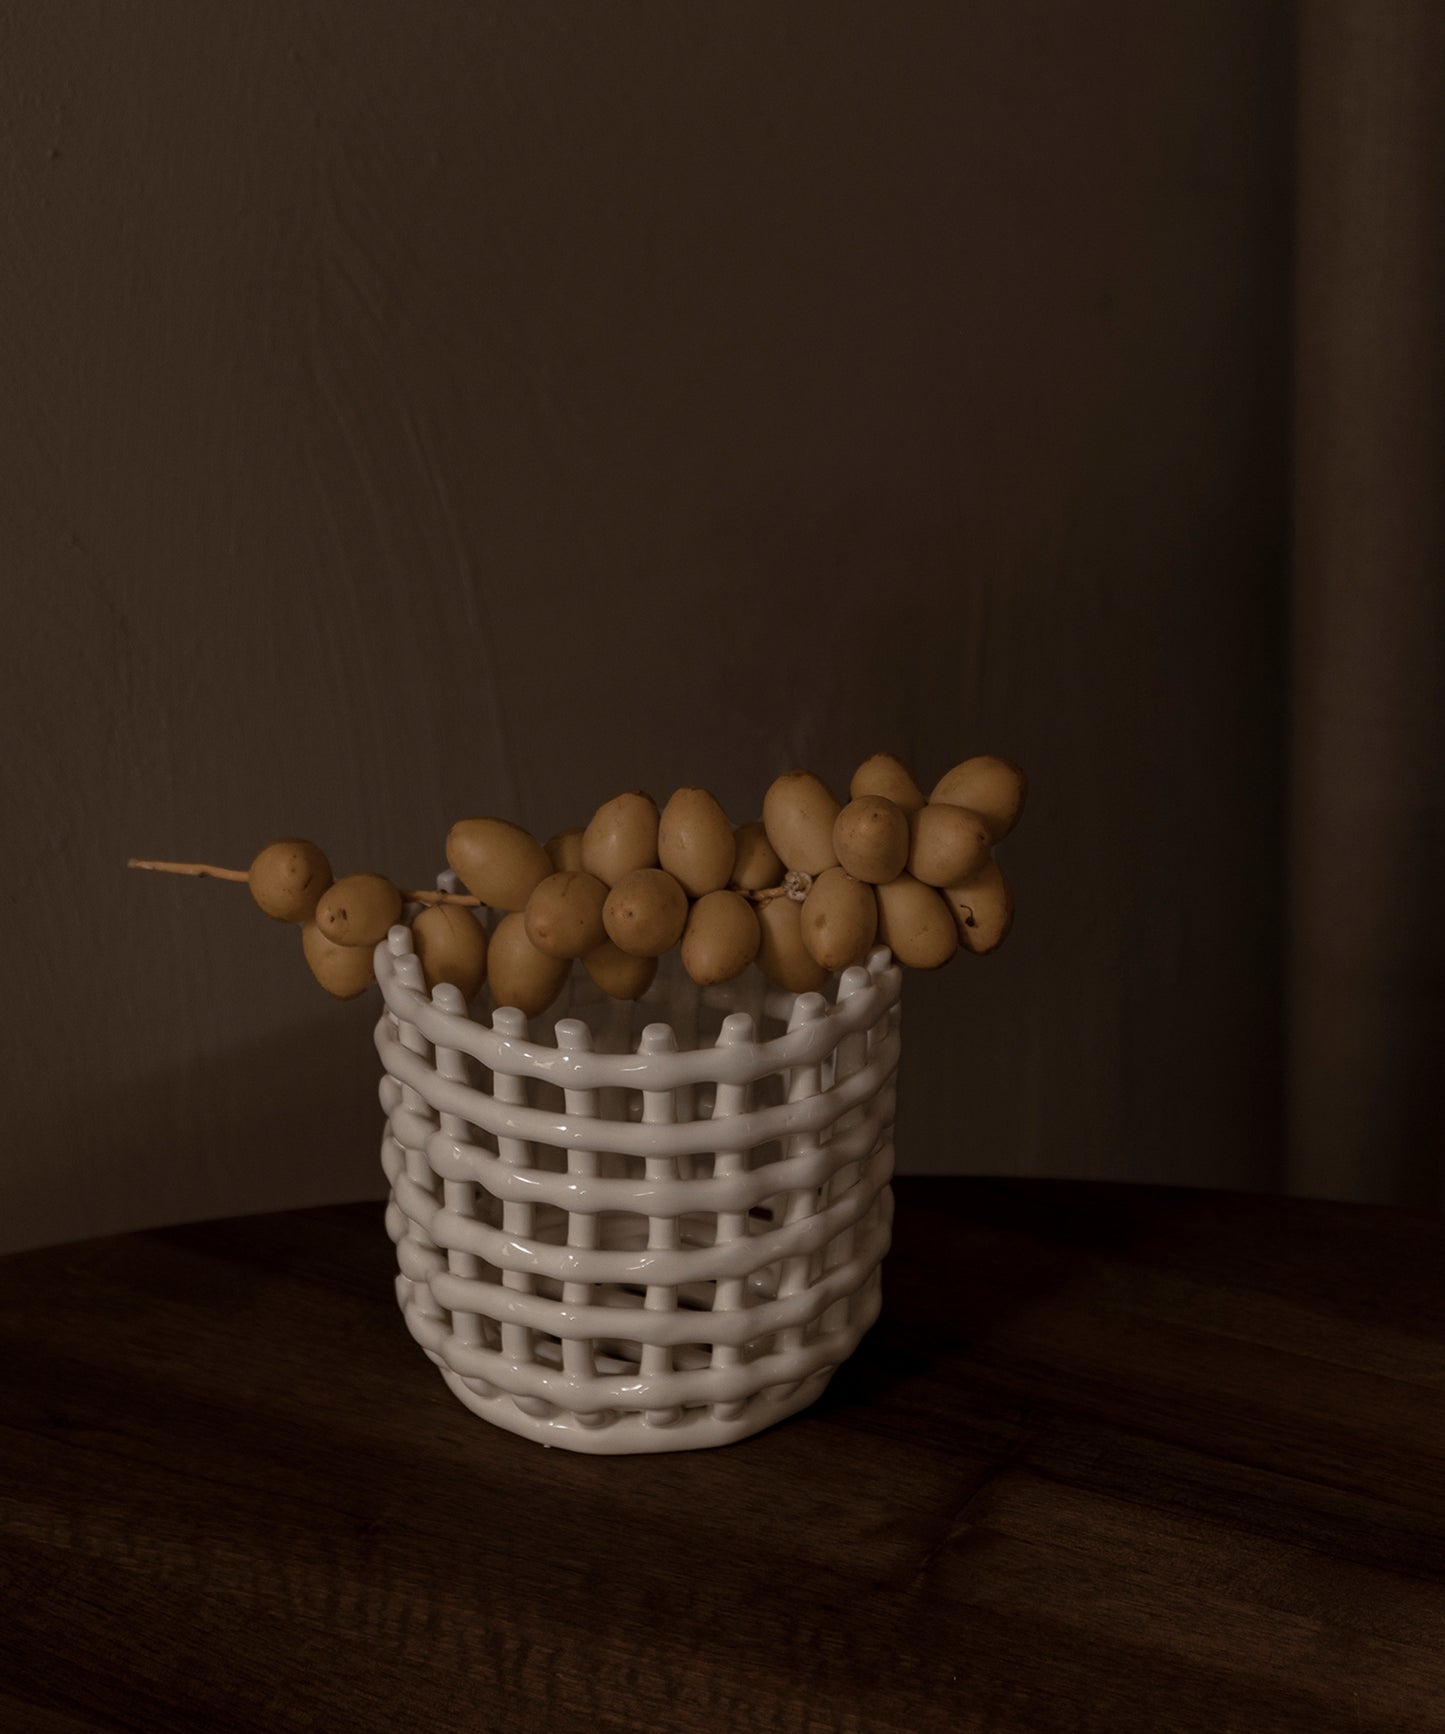 Ceramic Basket